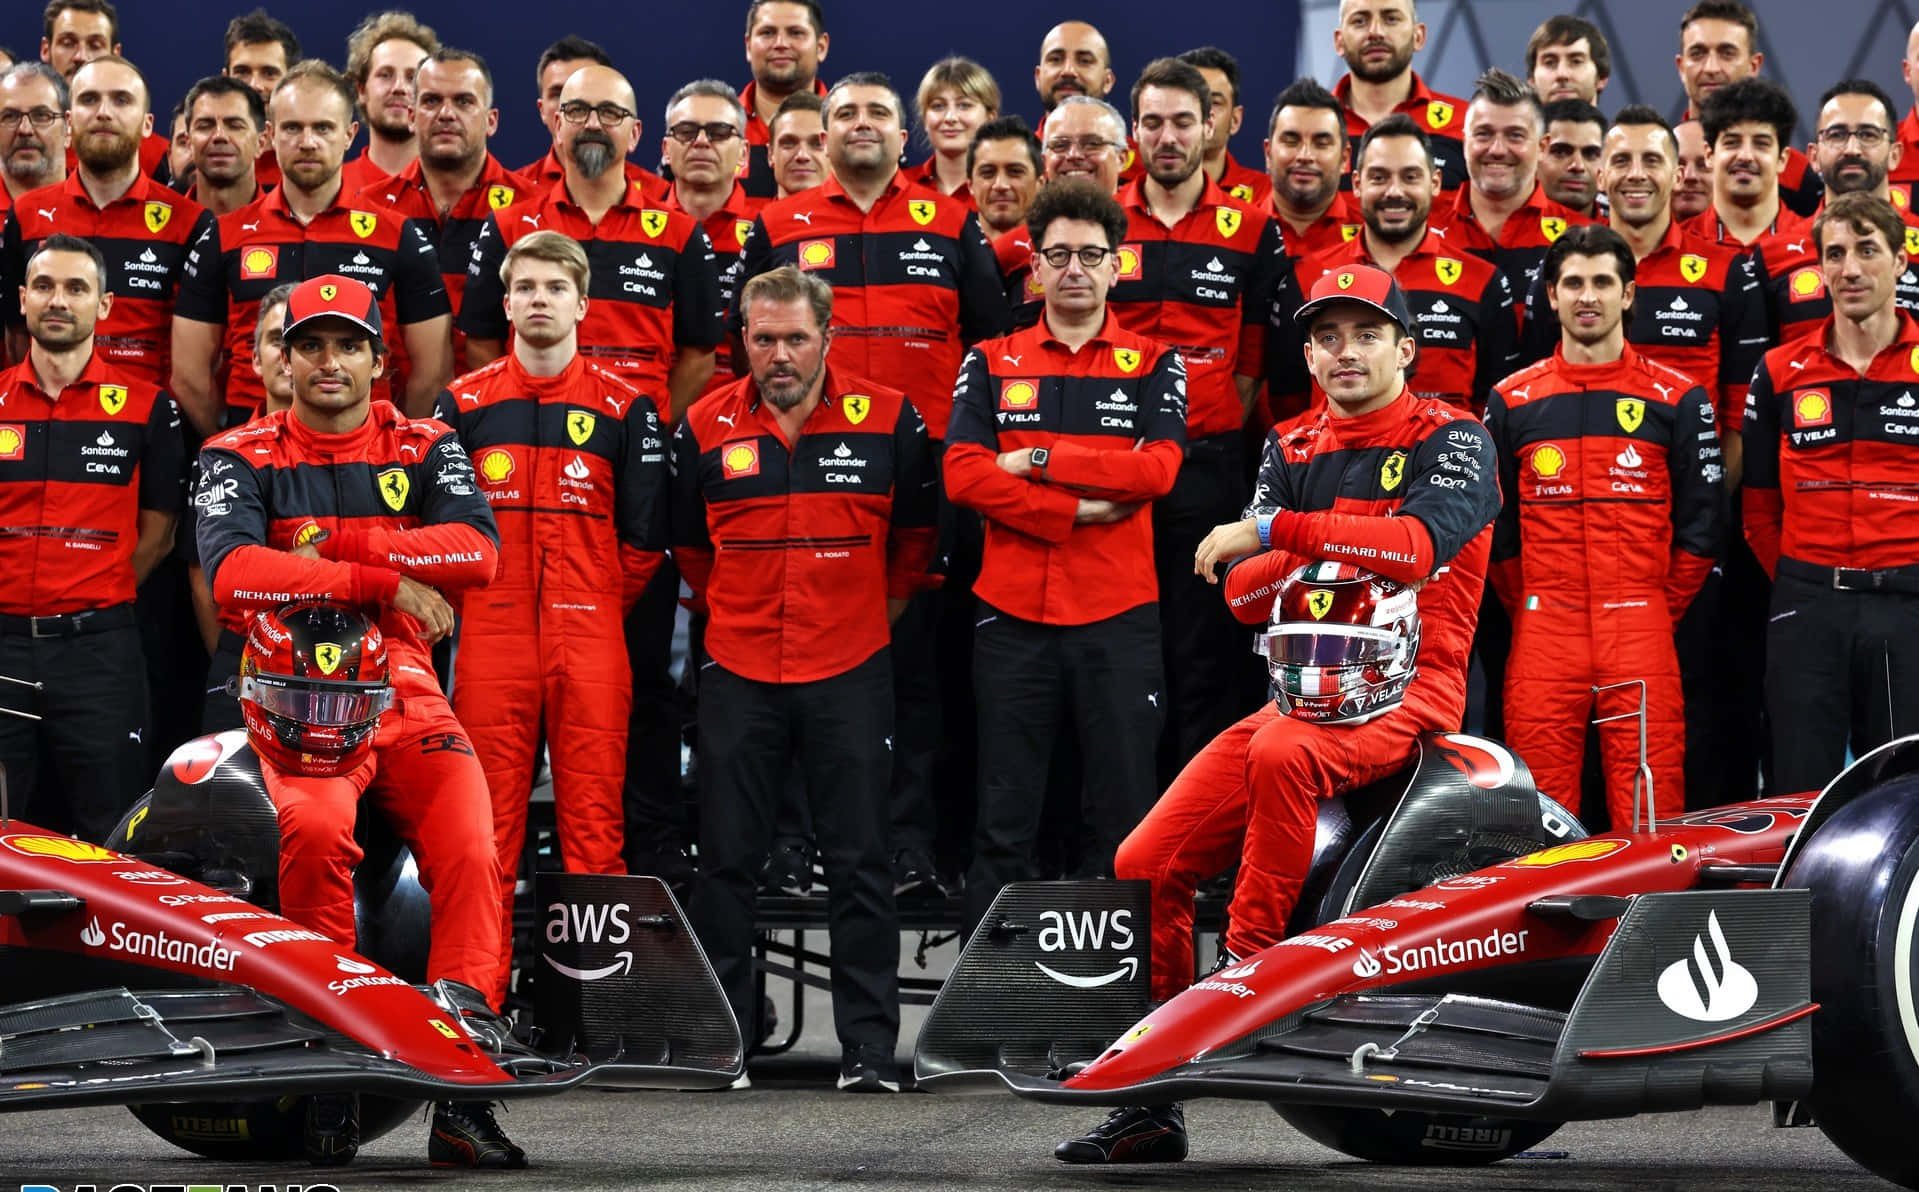 Ferrari Team Posing For A Photo